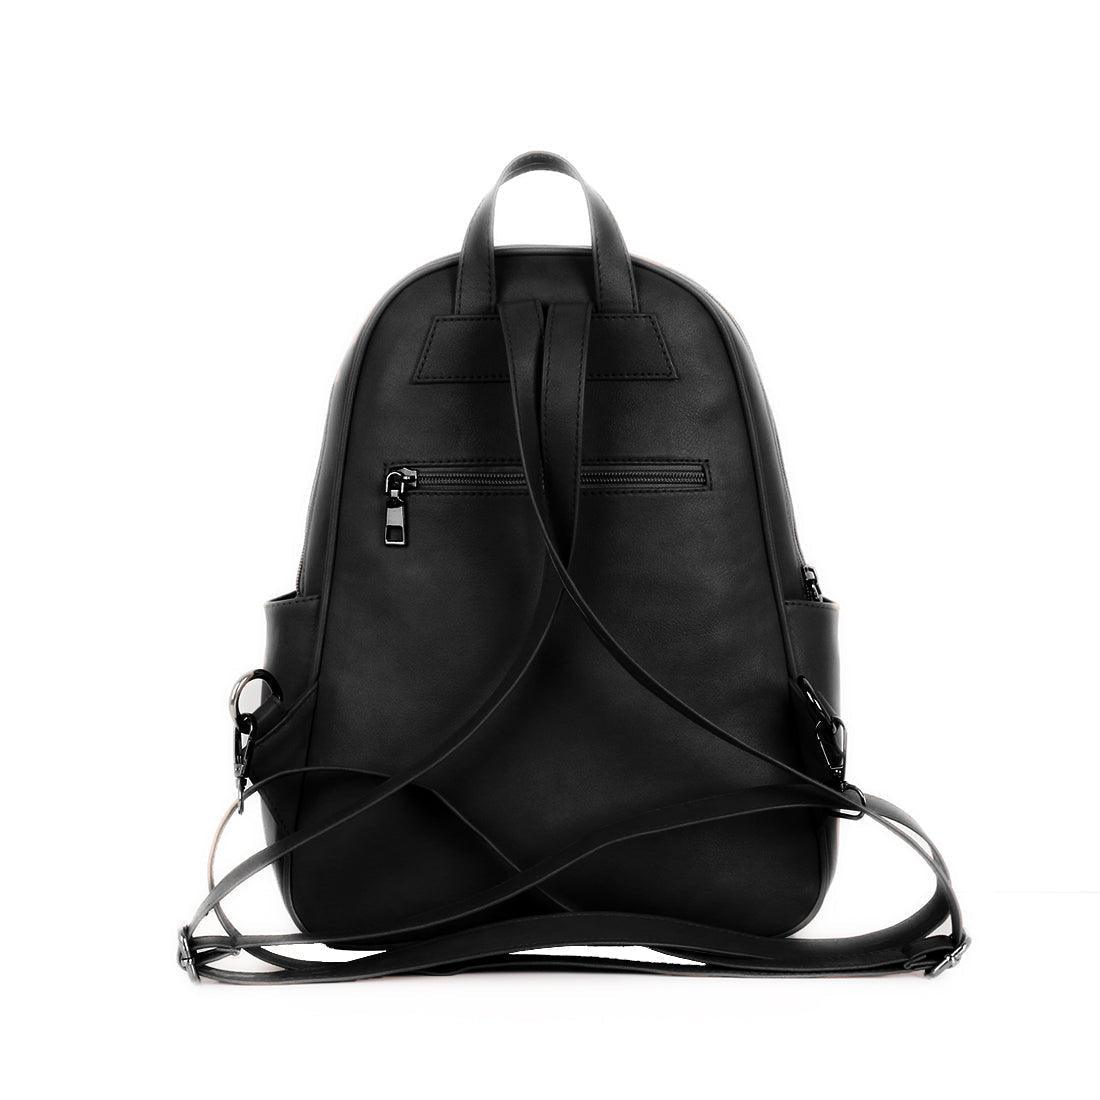 Black Mixed Backpack Sleeping Beauty - CANVAEGYPT